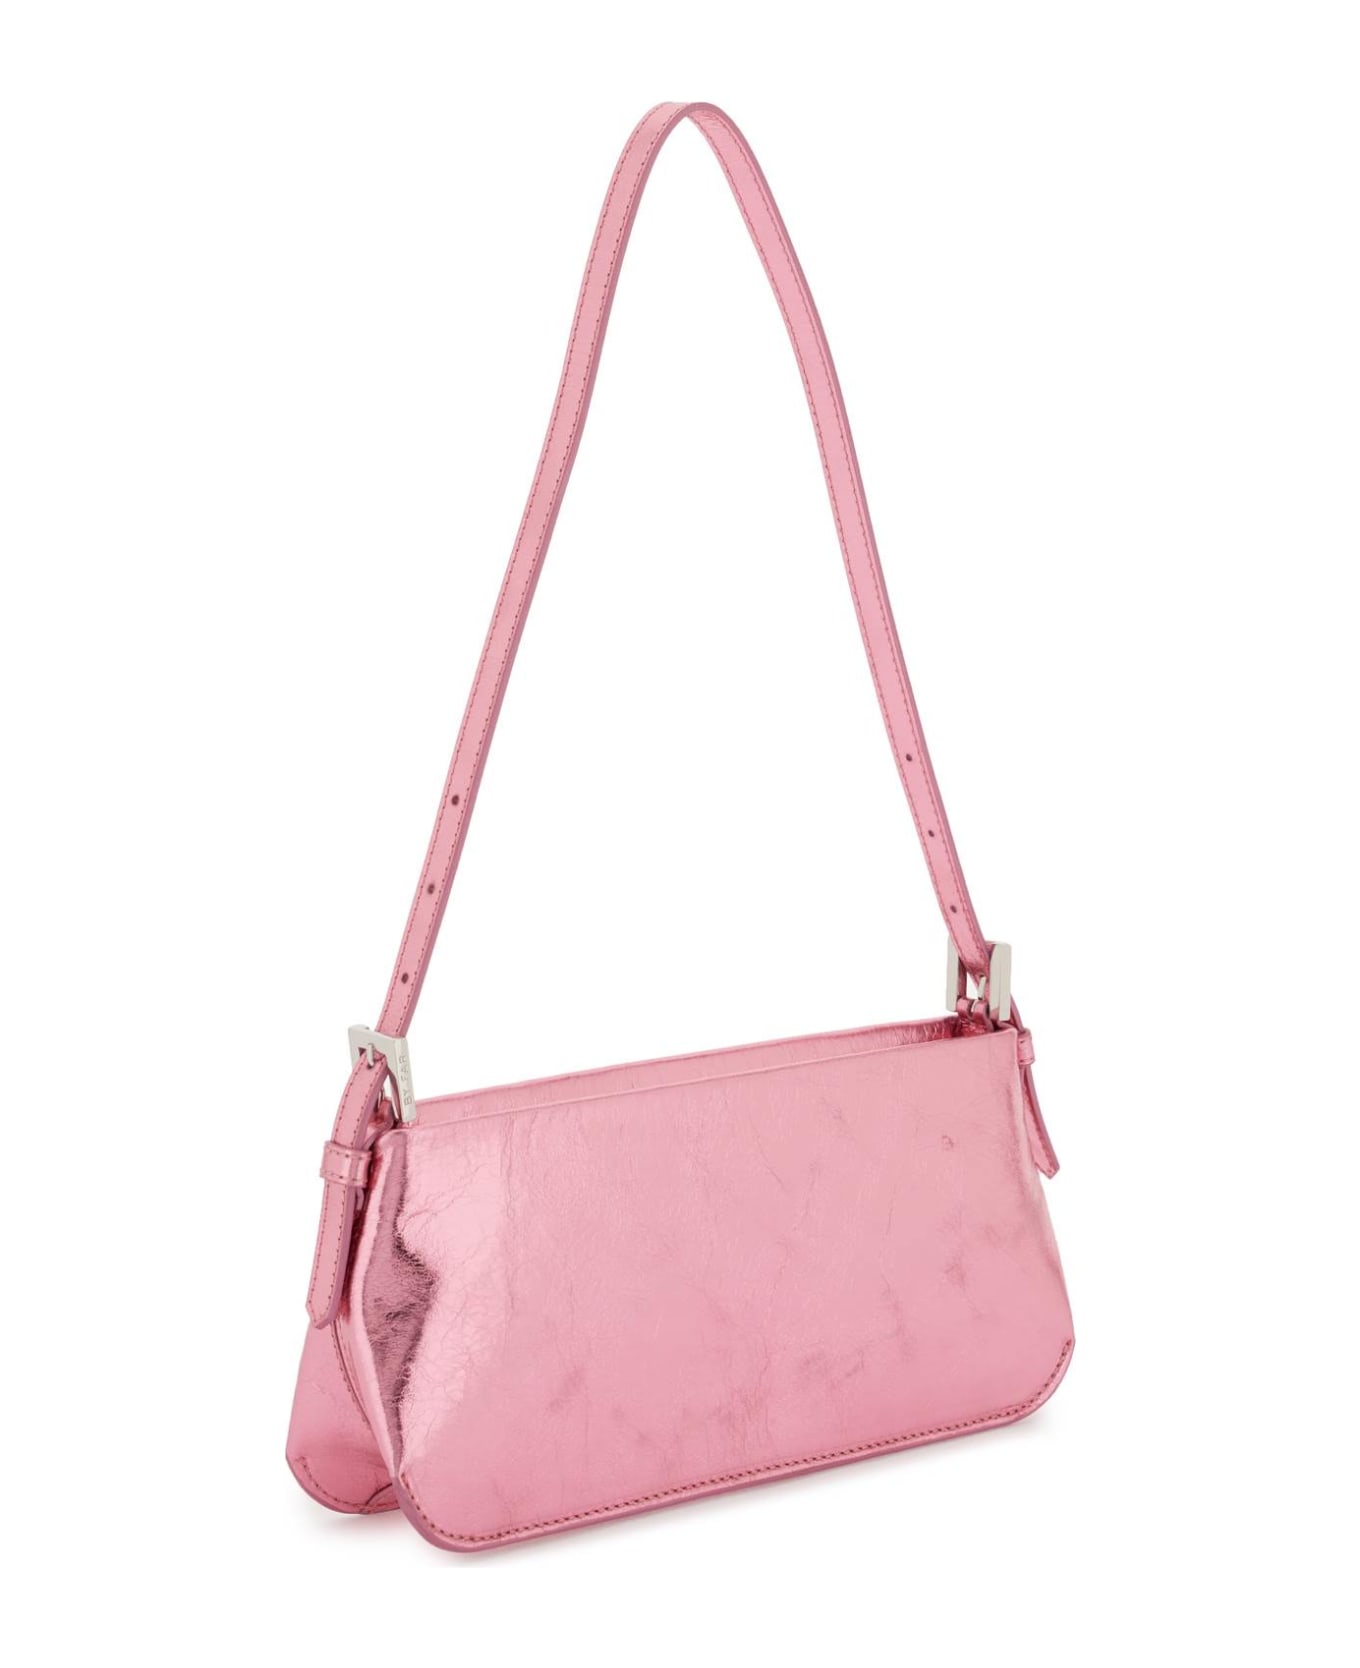 BY FAR Metallic Leather 'dulce' Shoulder Bag - LIPSTICK (Pink)